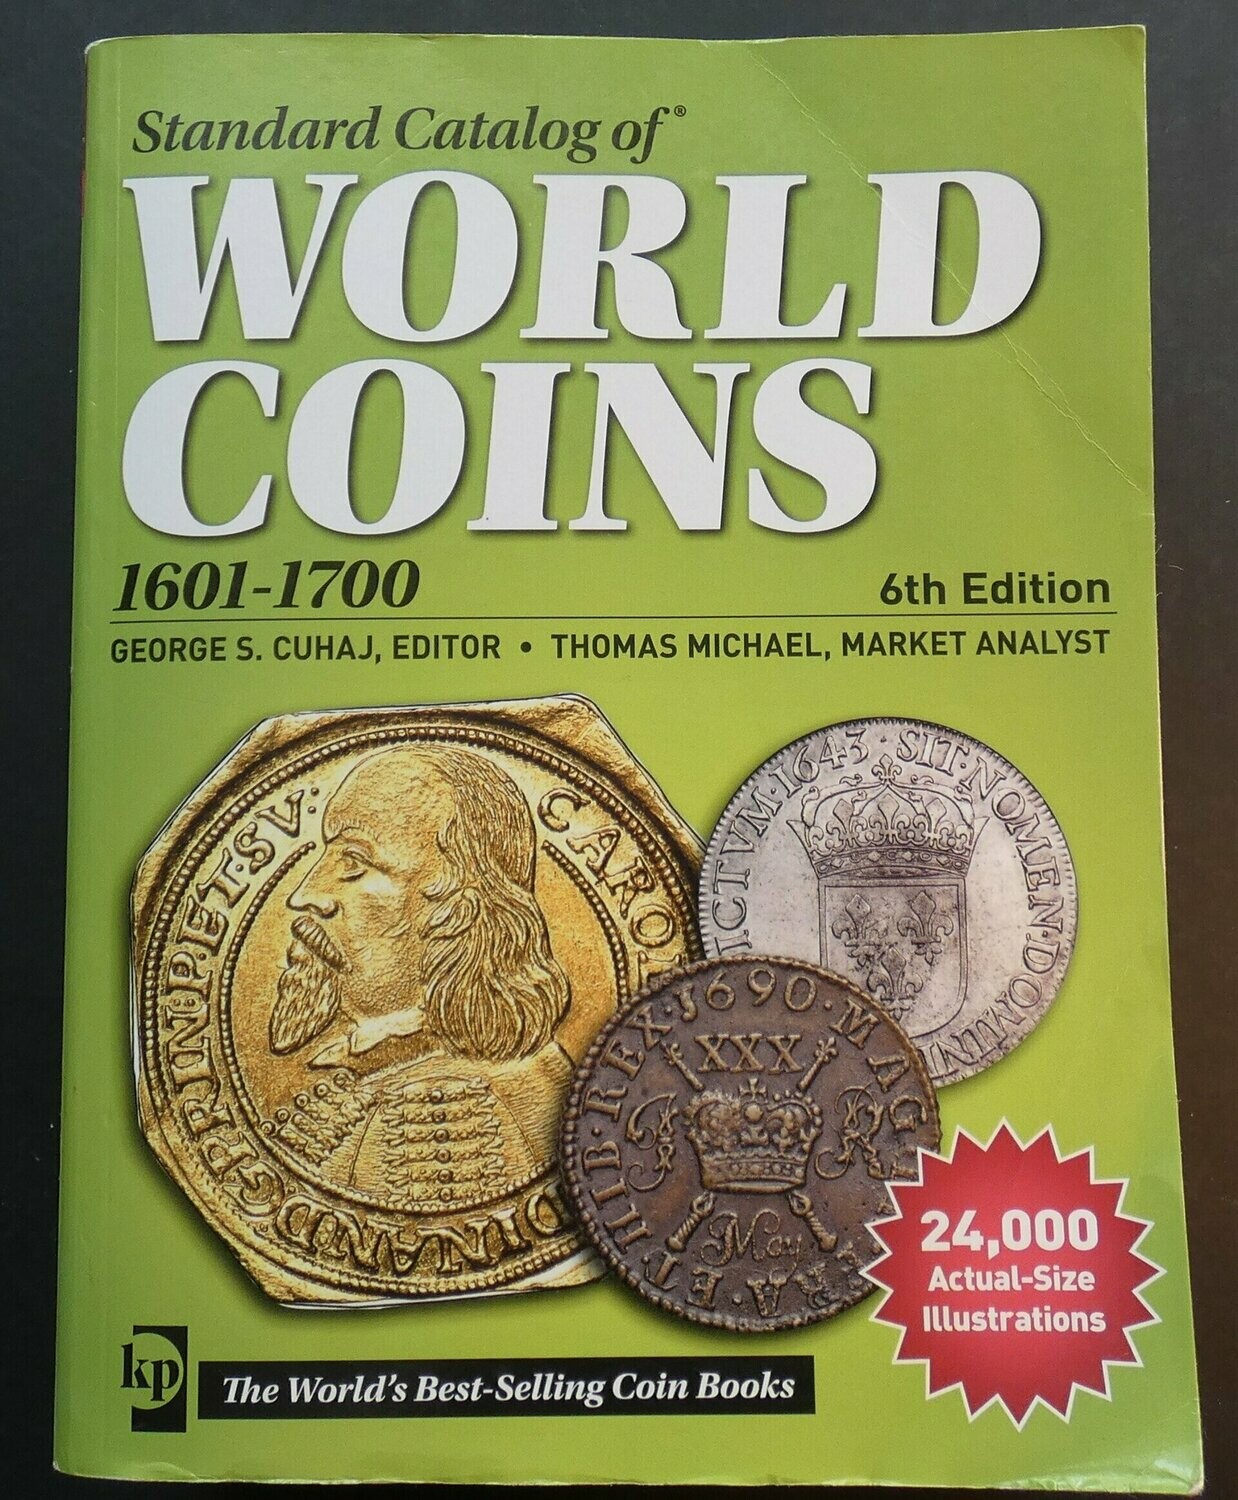 World; George S. Cuhaj (ed.), "Standard Catalog of World Coins 1601-1700"